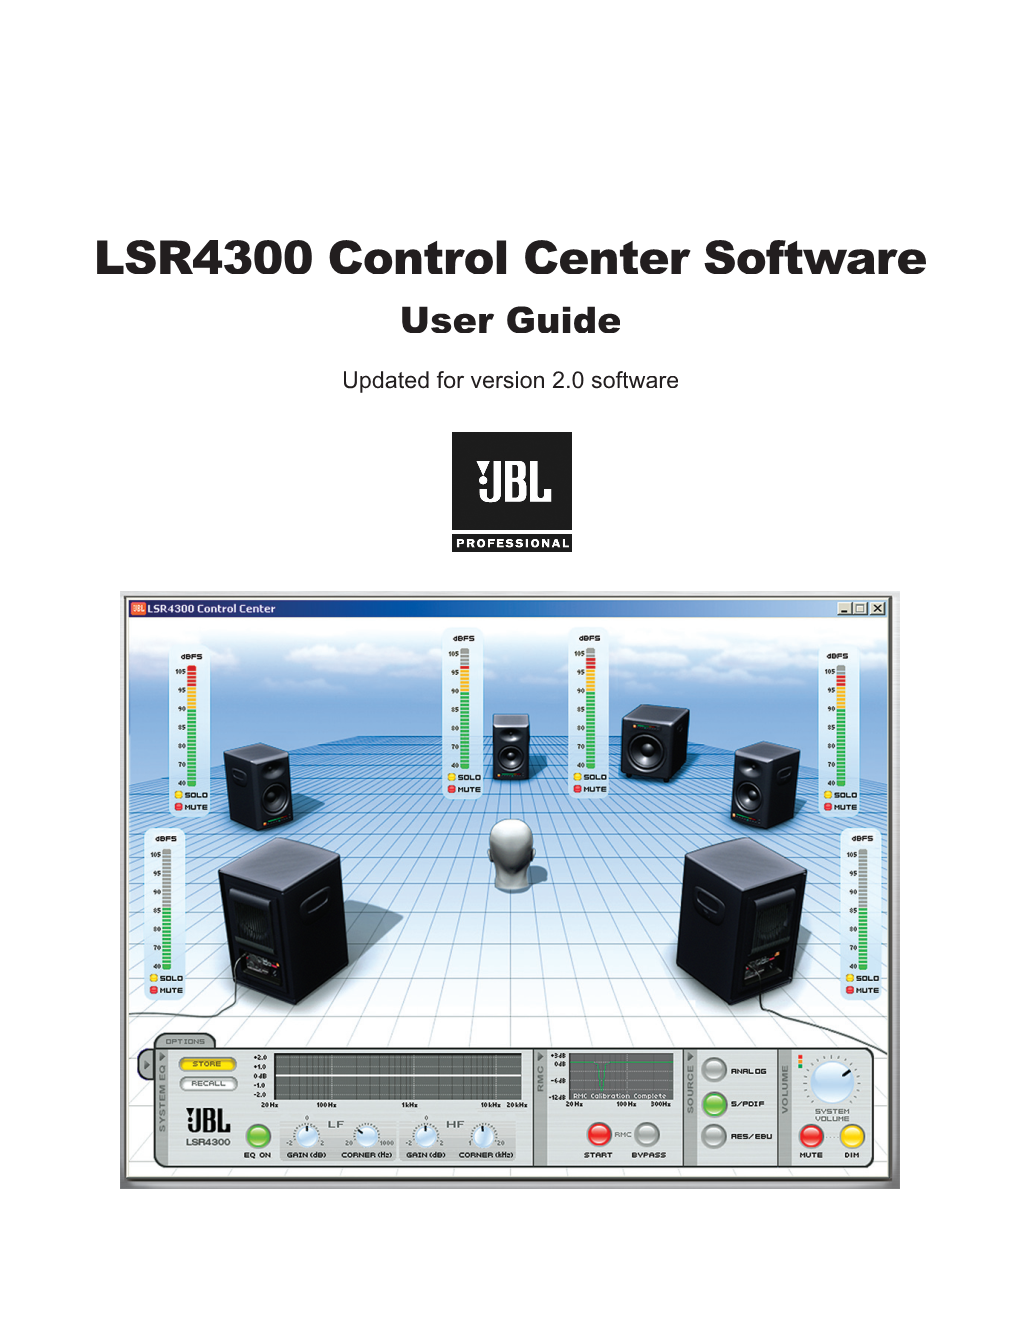 LSR4300 Control Center Software User Guide